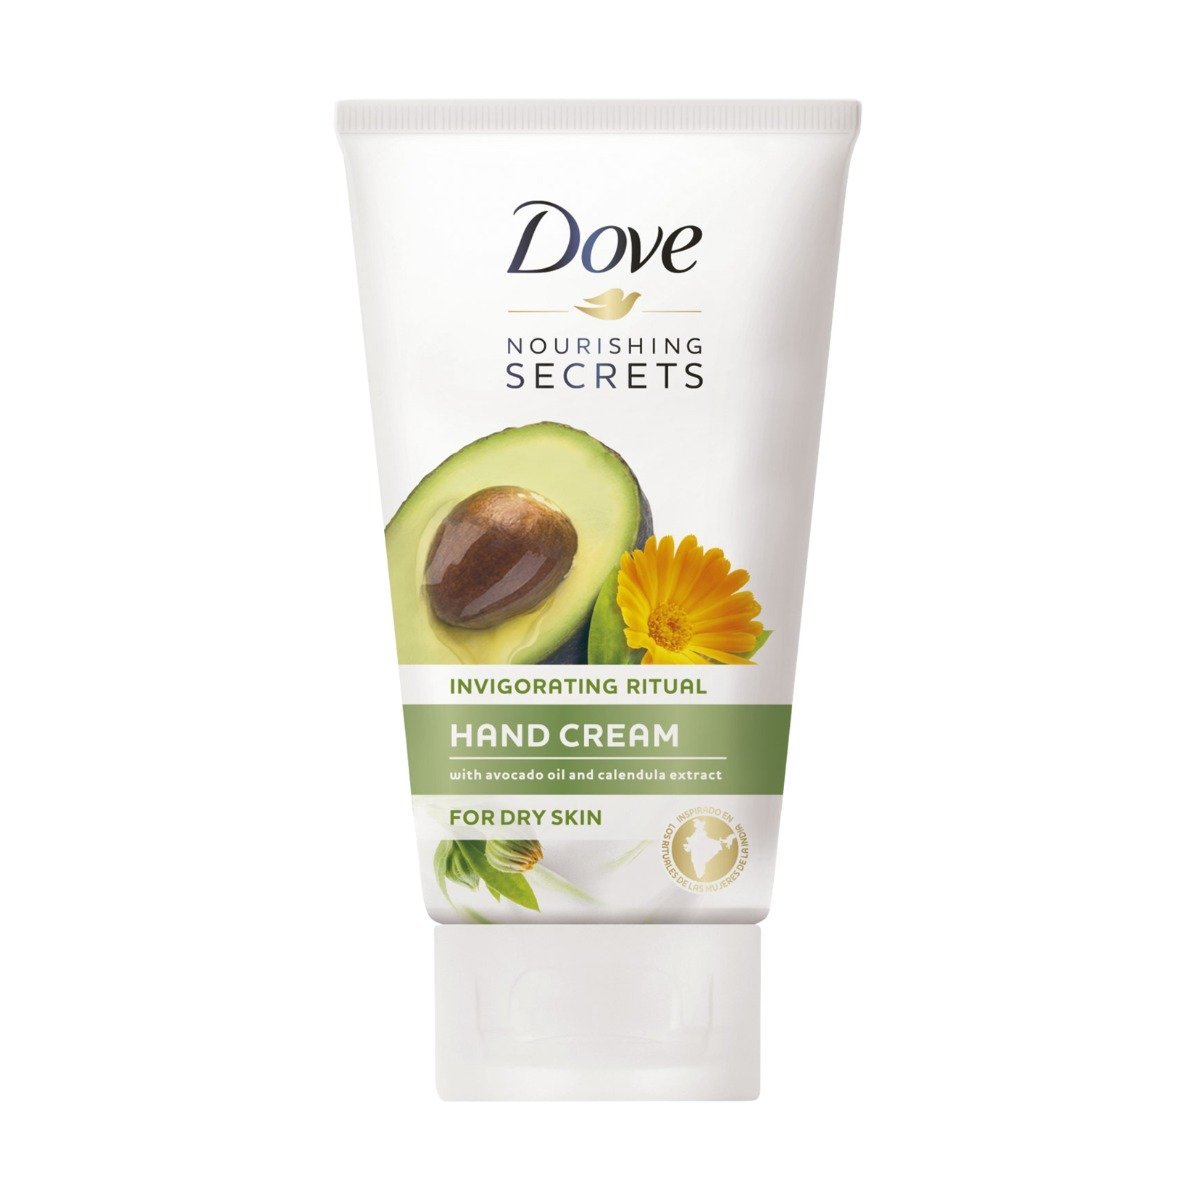 Dove Nourishing Secrets Invigorating Ritual Hand Cream - 75ml - Bloom Pharmacy